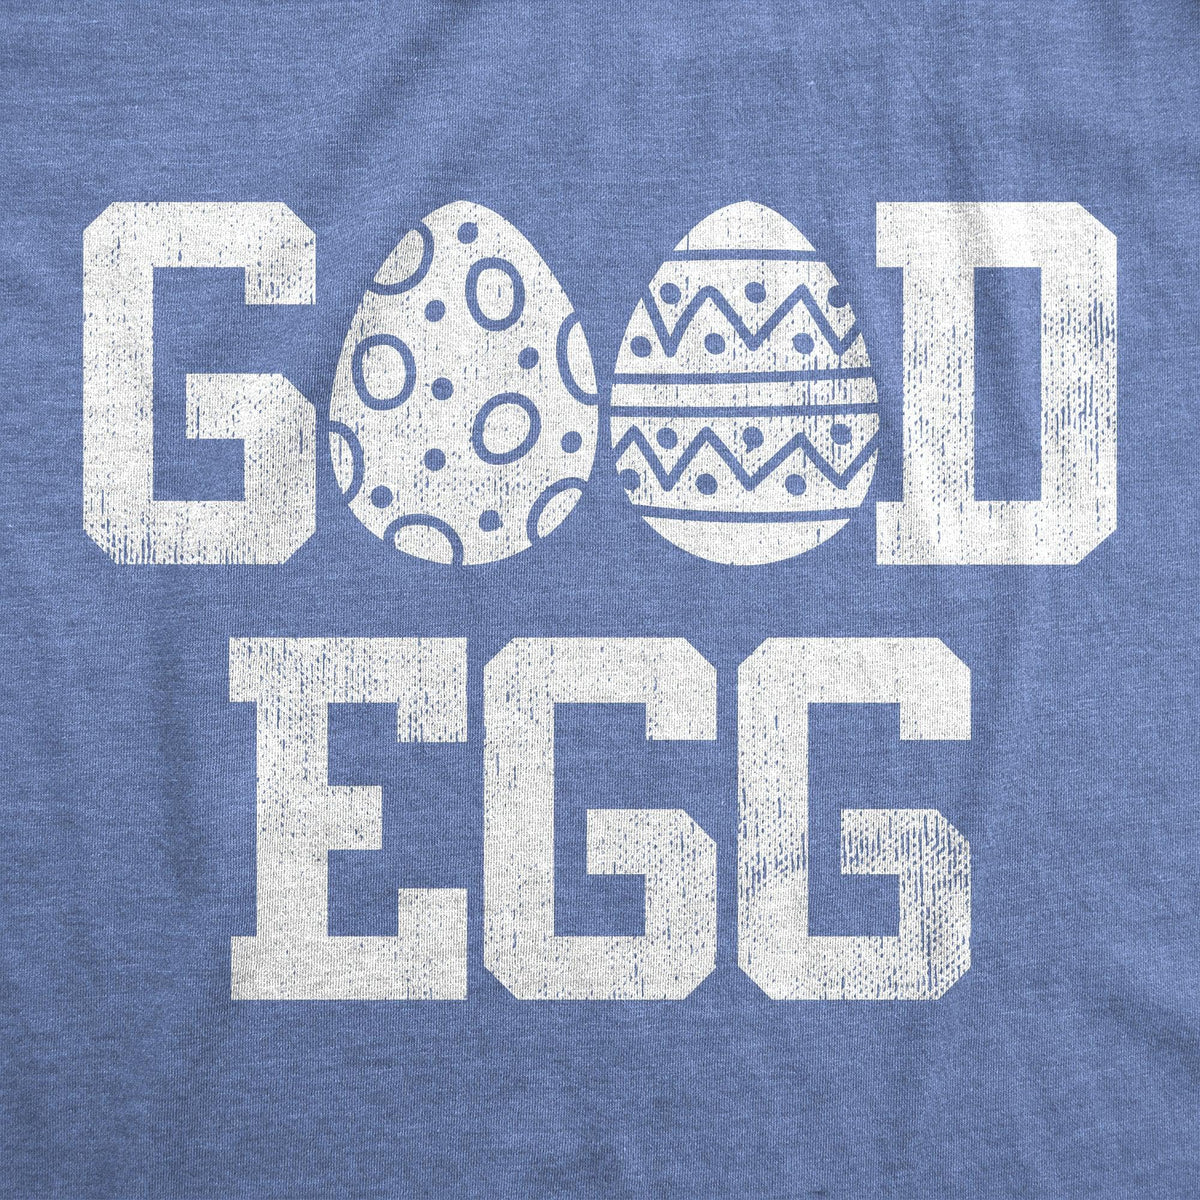 Good Egg Women&#39;s Tshirt  -  Crazy Dog T-Shirts